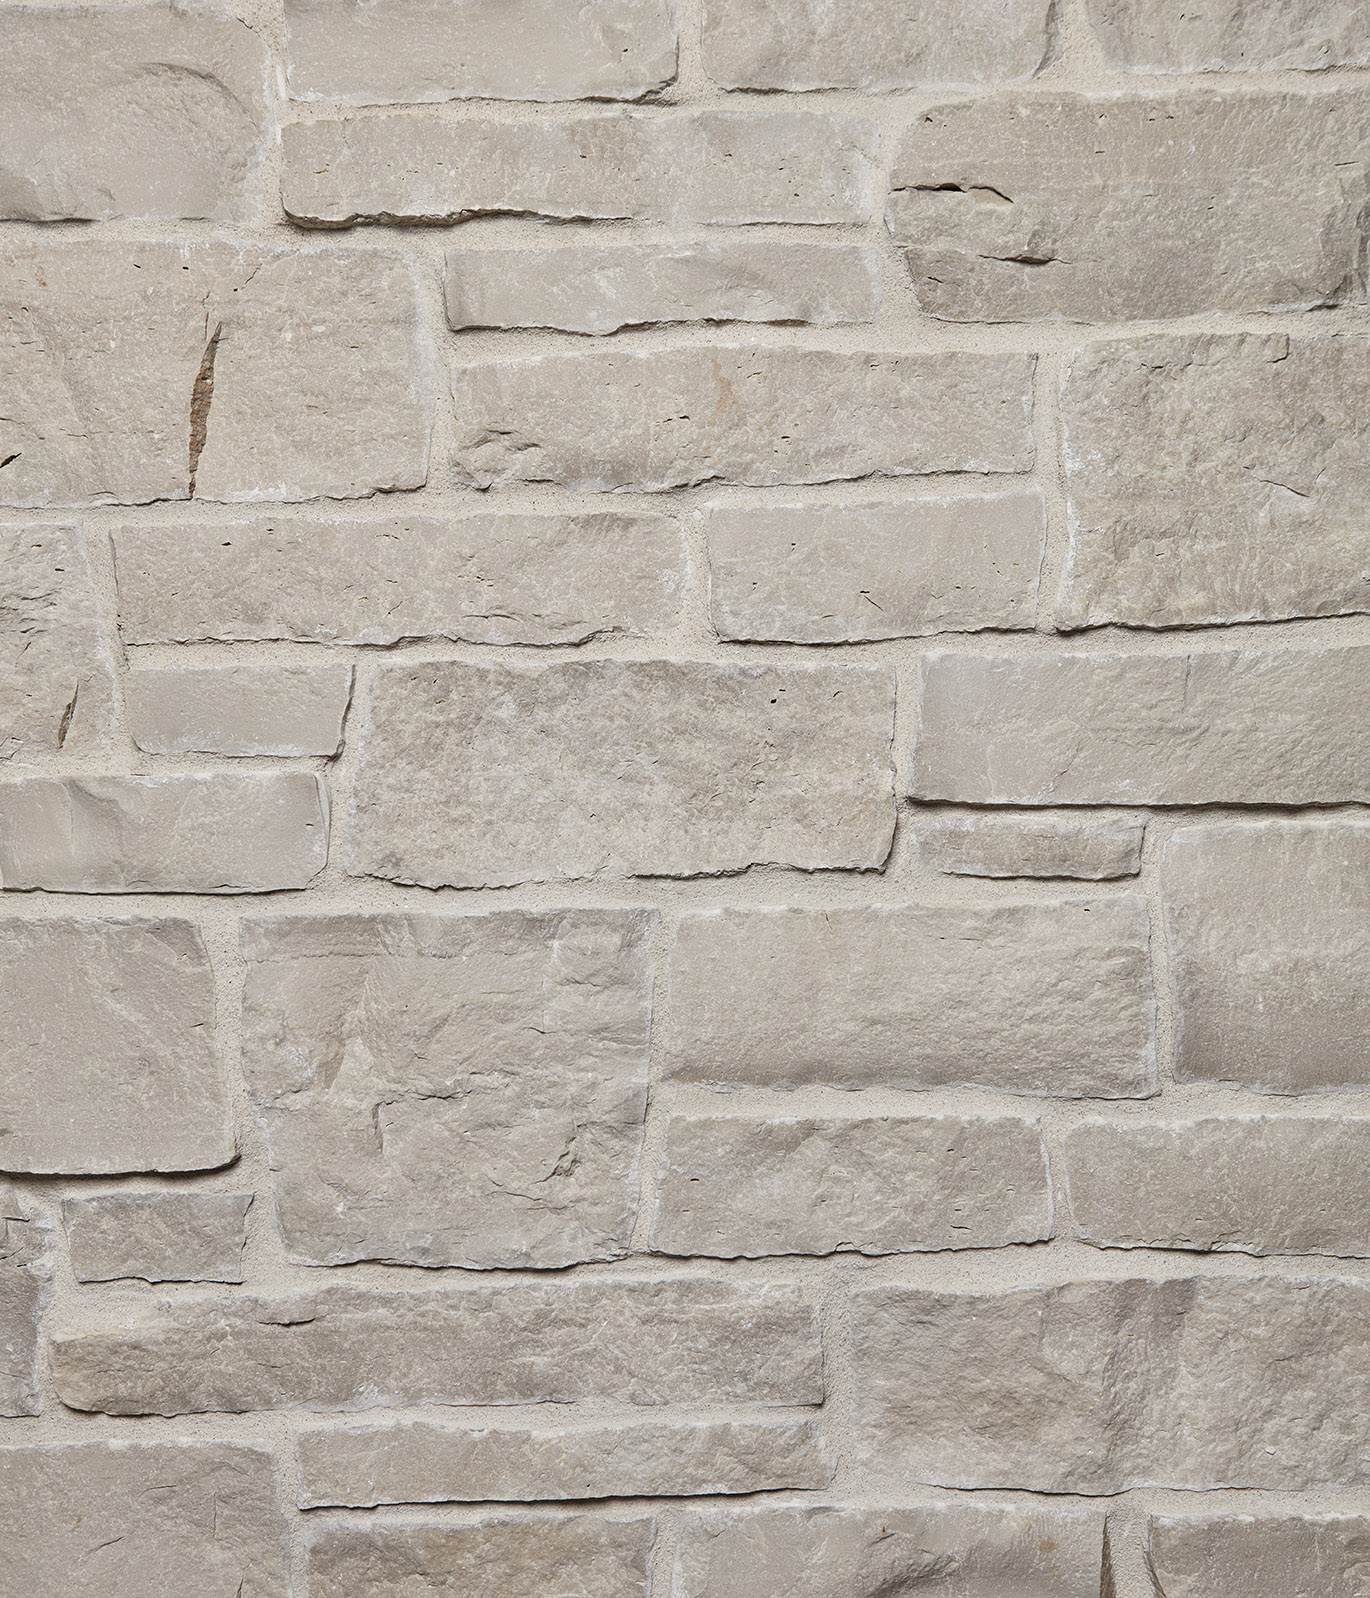 White Country Squire full stone veneer thin stone siding masonry cladding  Buechel Stone